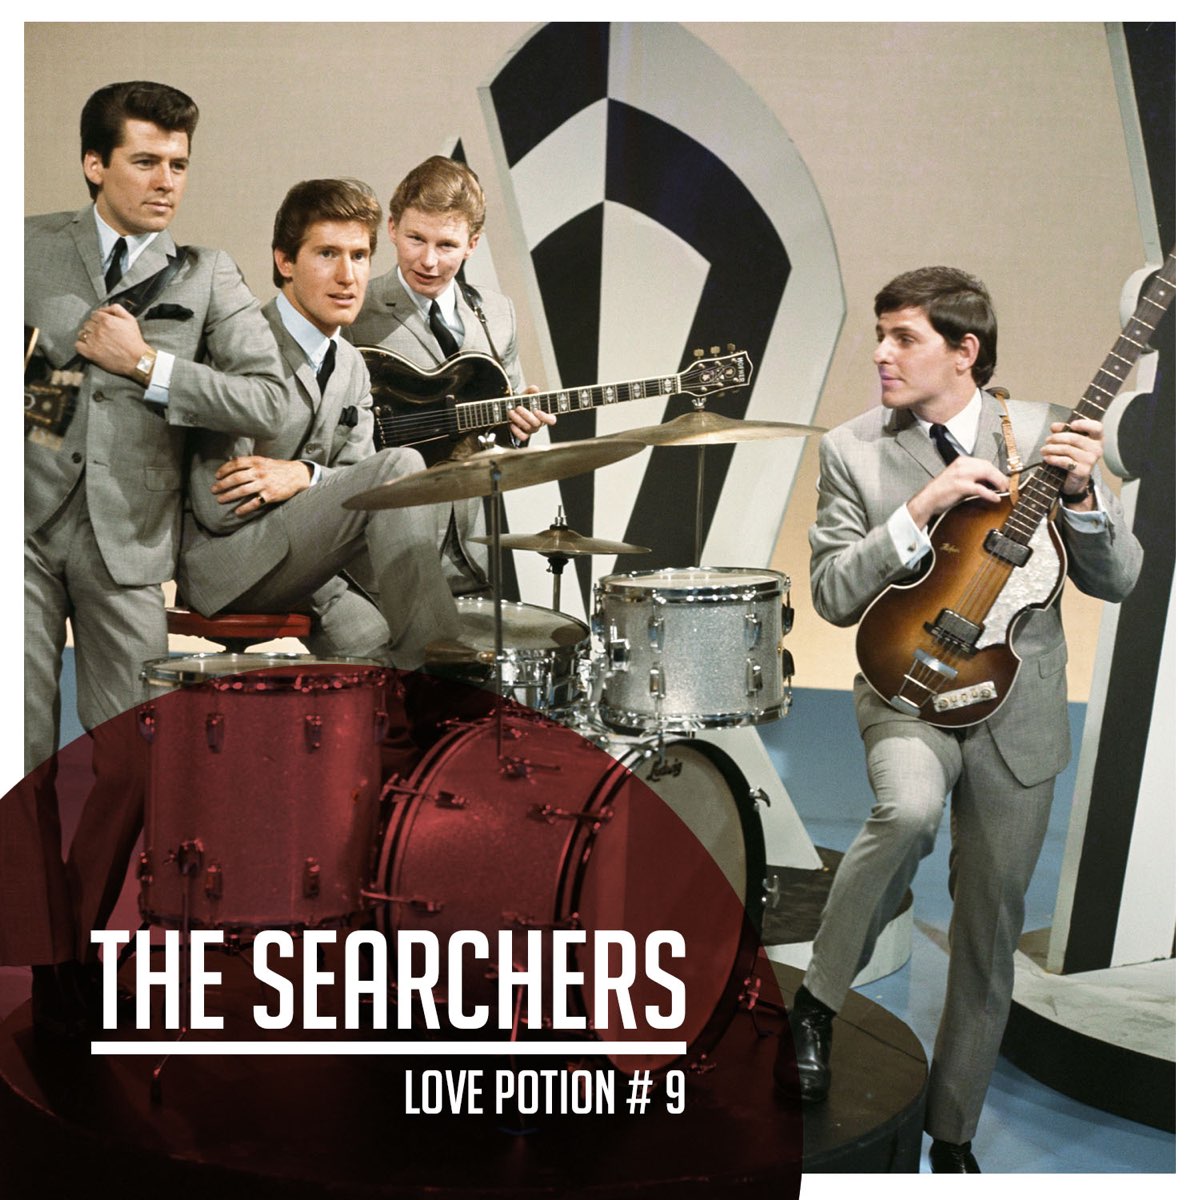 Песни 9 часов. Группа the Searchers. The Searchers Love Potion no. 9. The Searchers 1973. Фото группы the Searchers.